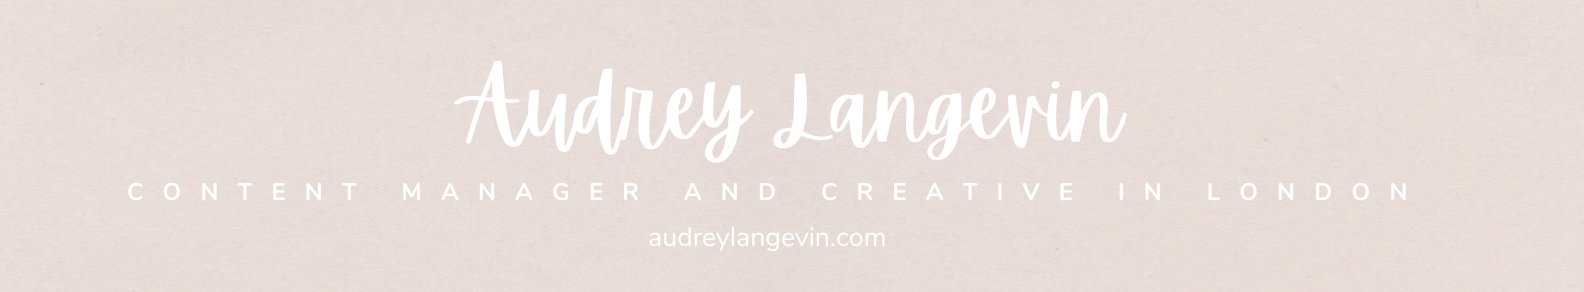 Audrey Langevin's profile banner